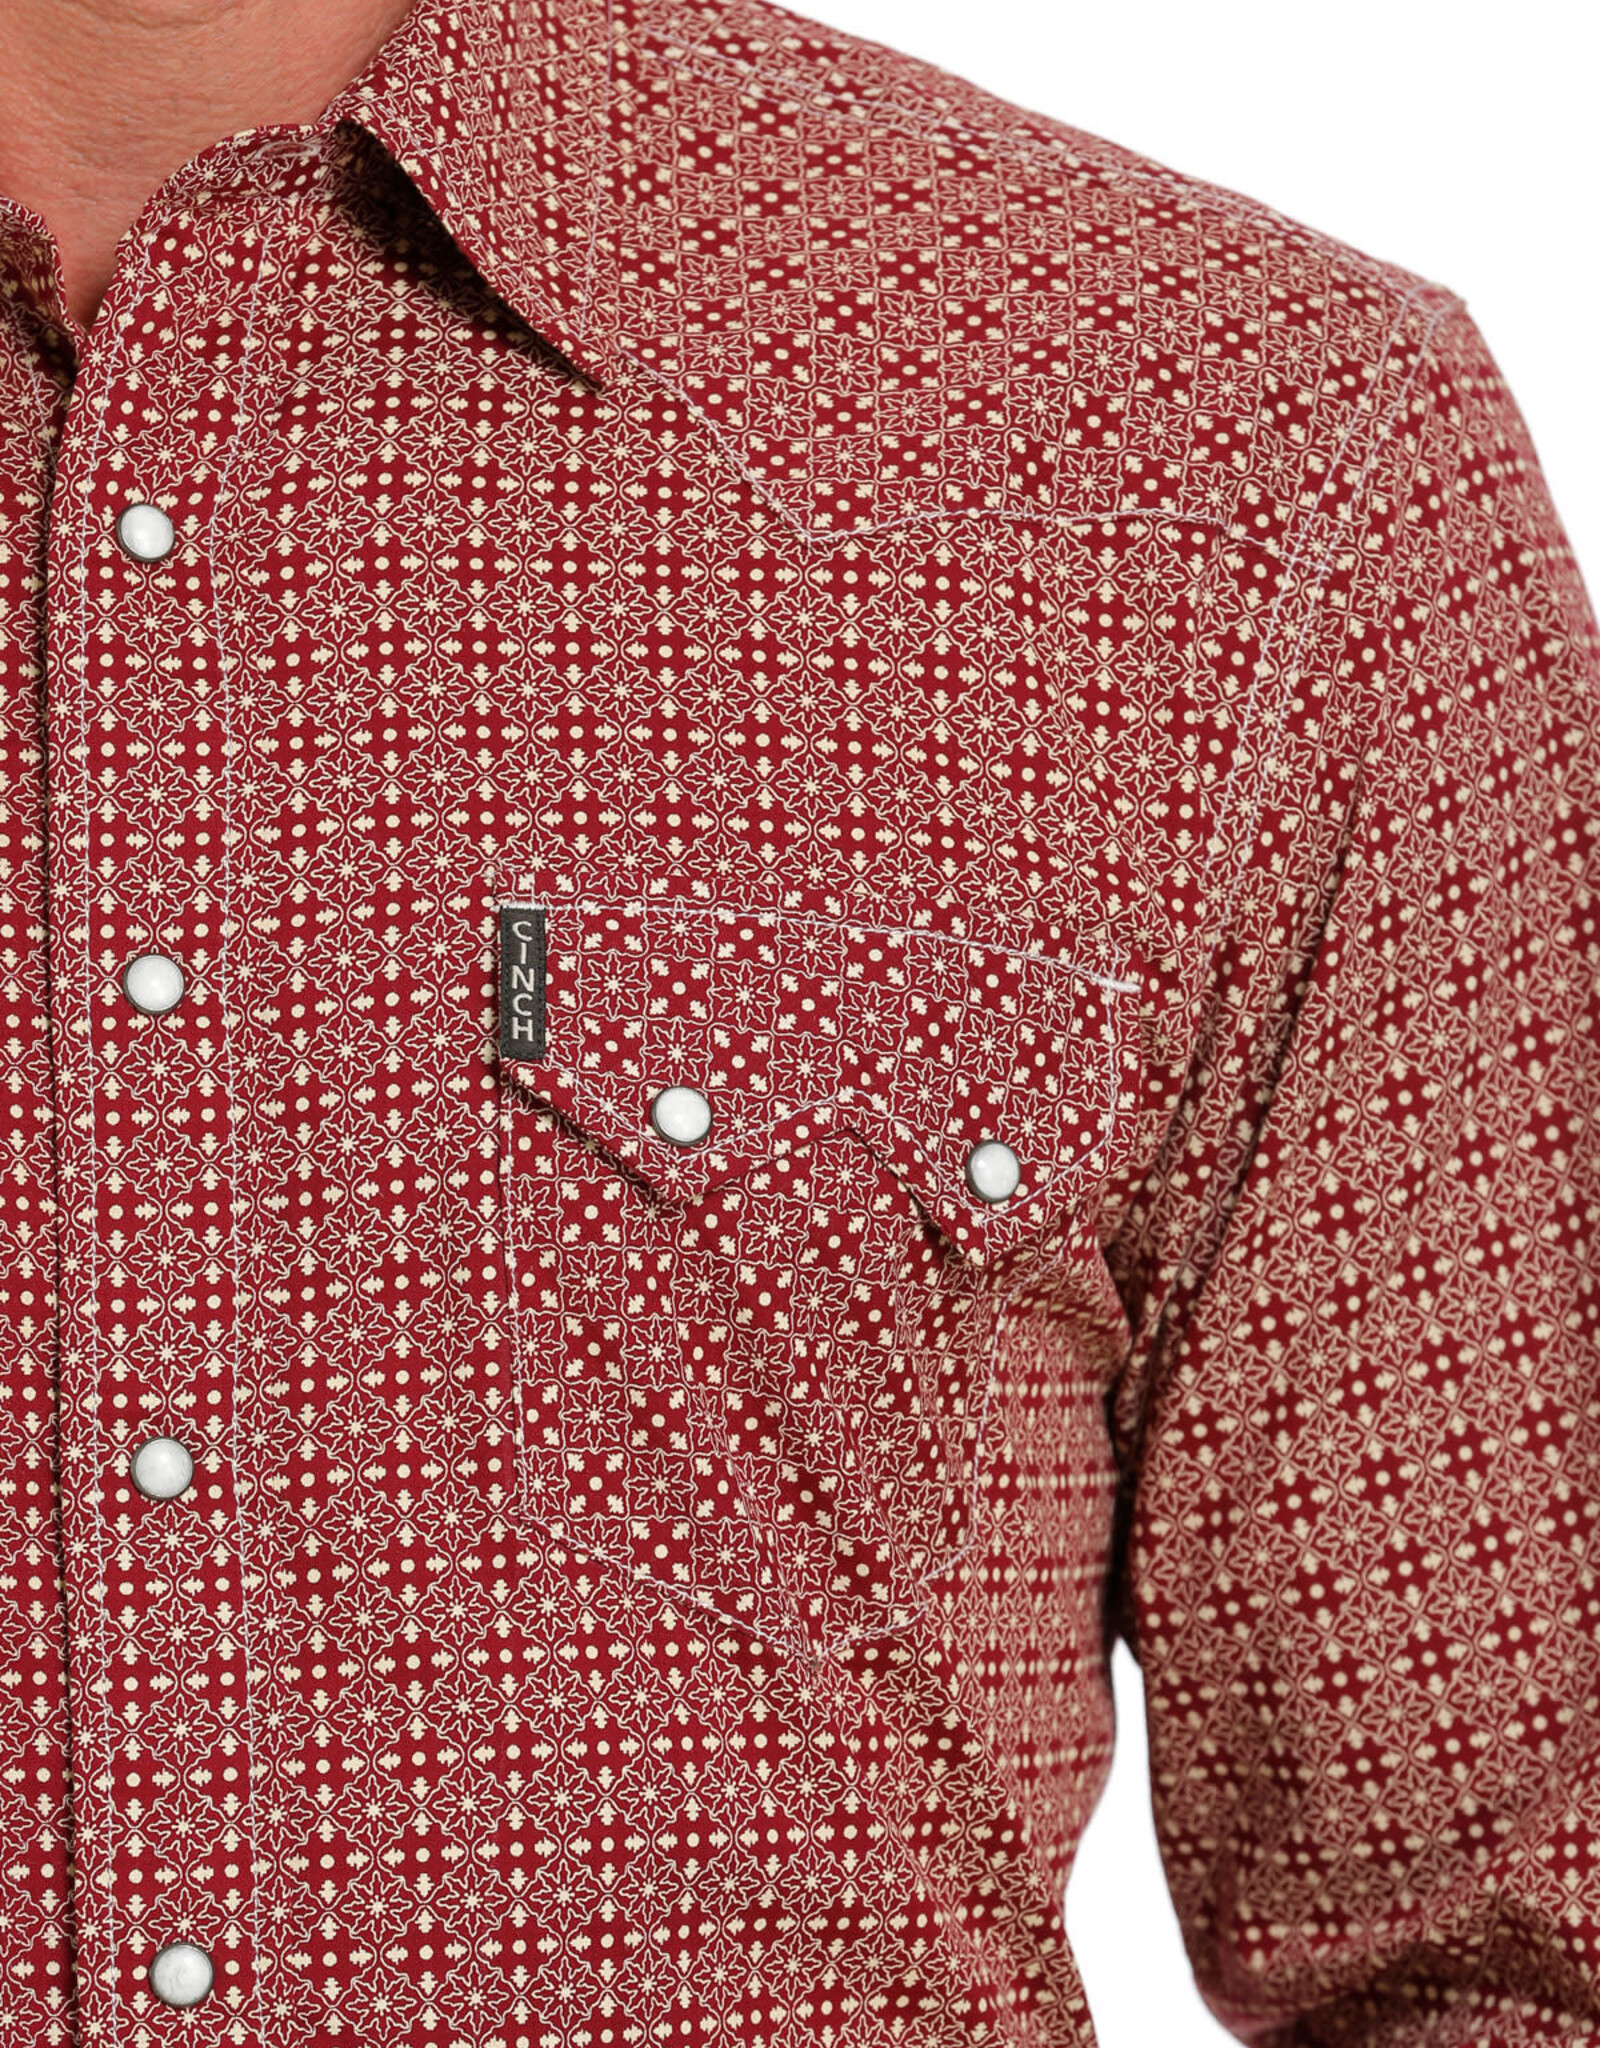 Cinch Mens Modern Fit Cinch Burgundy Red Print Two Pocket Long Sleeve Western Snap Shirt